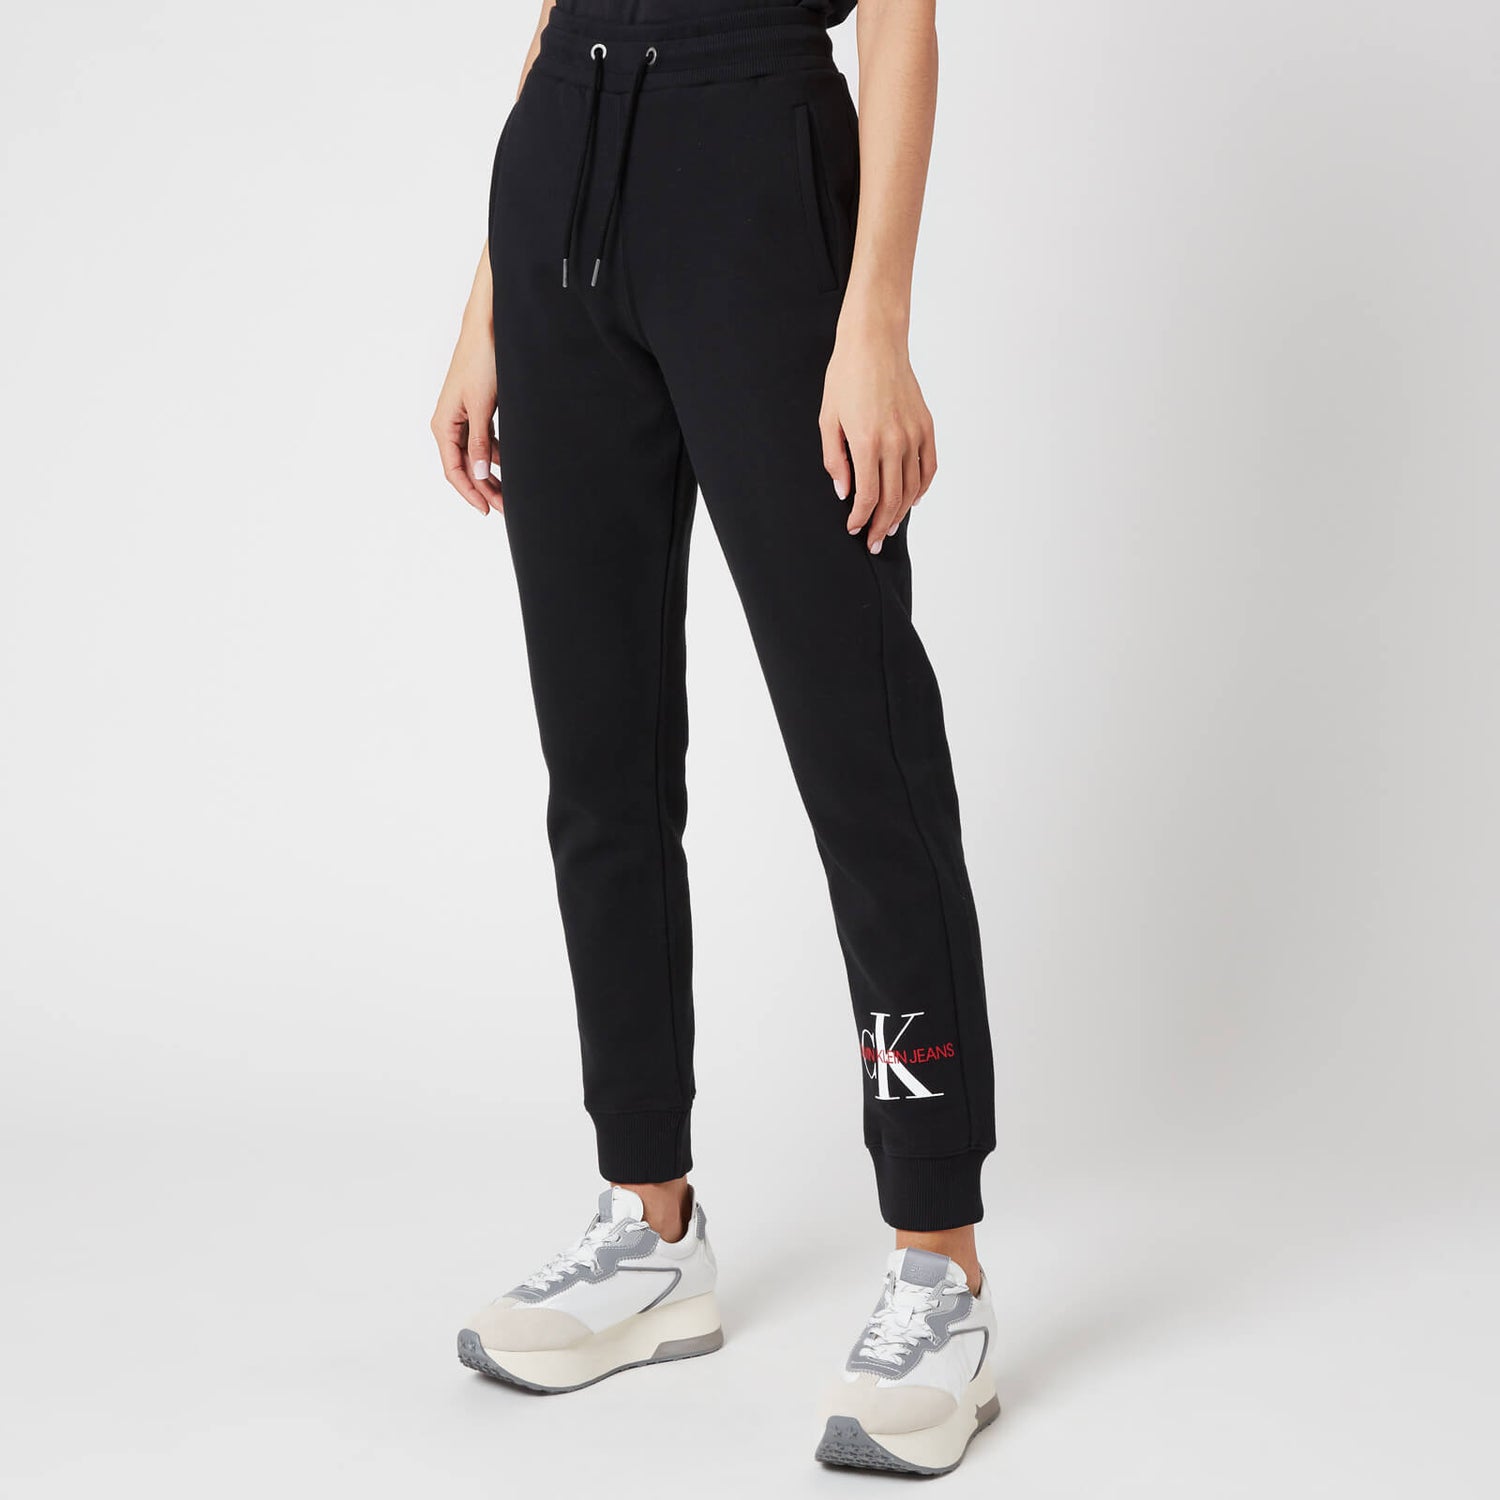 Calvin Klein Jeans Women's Monogram Jog Pants - Ck Black